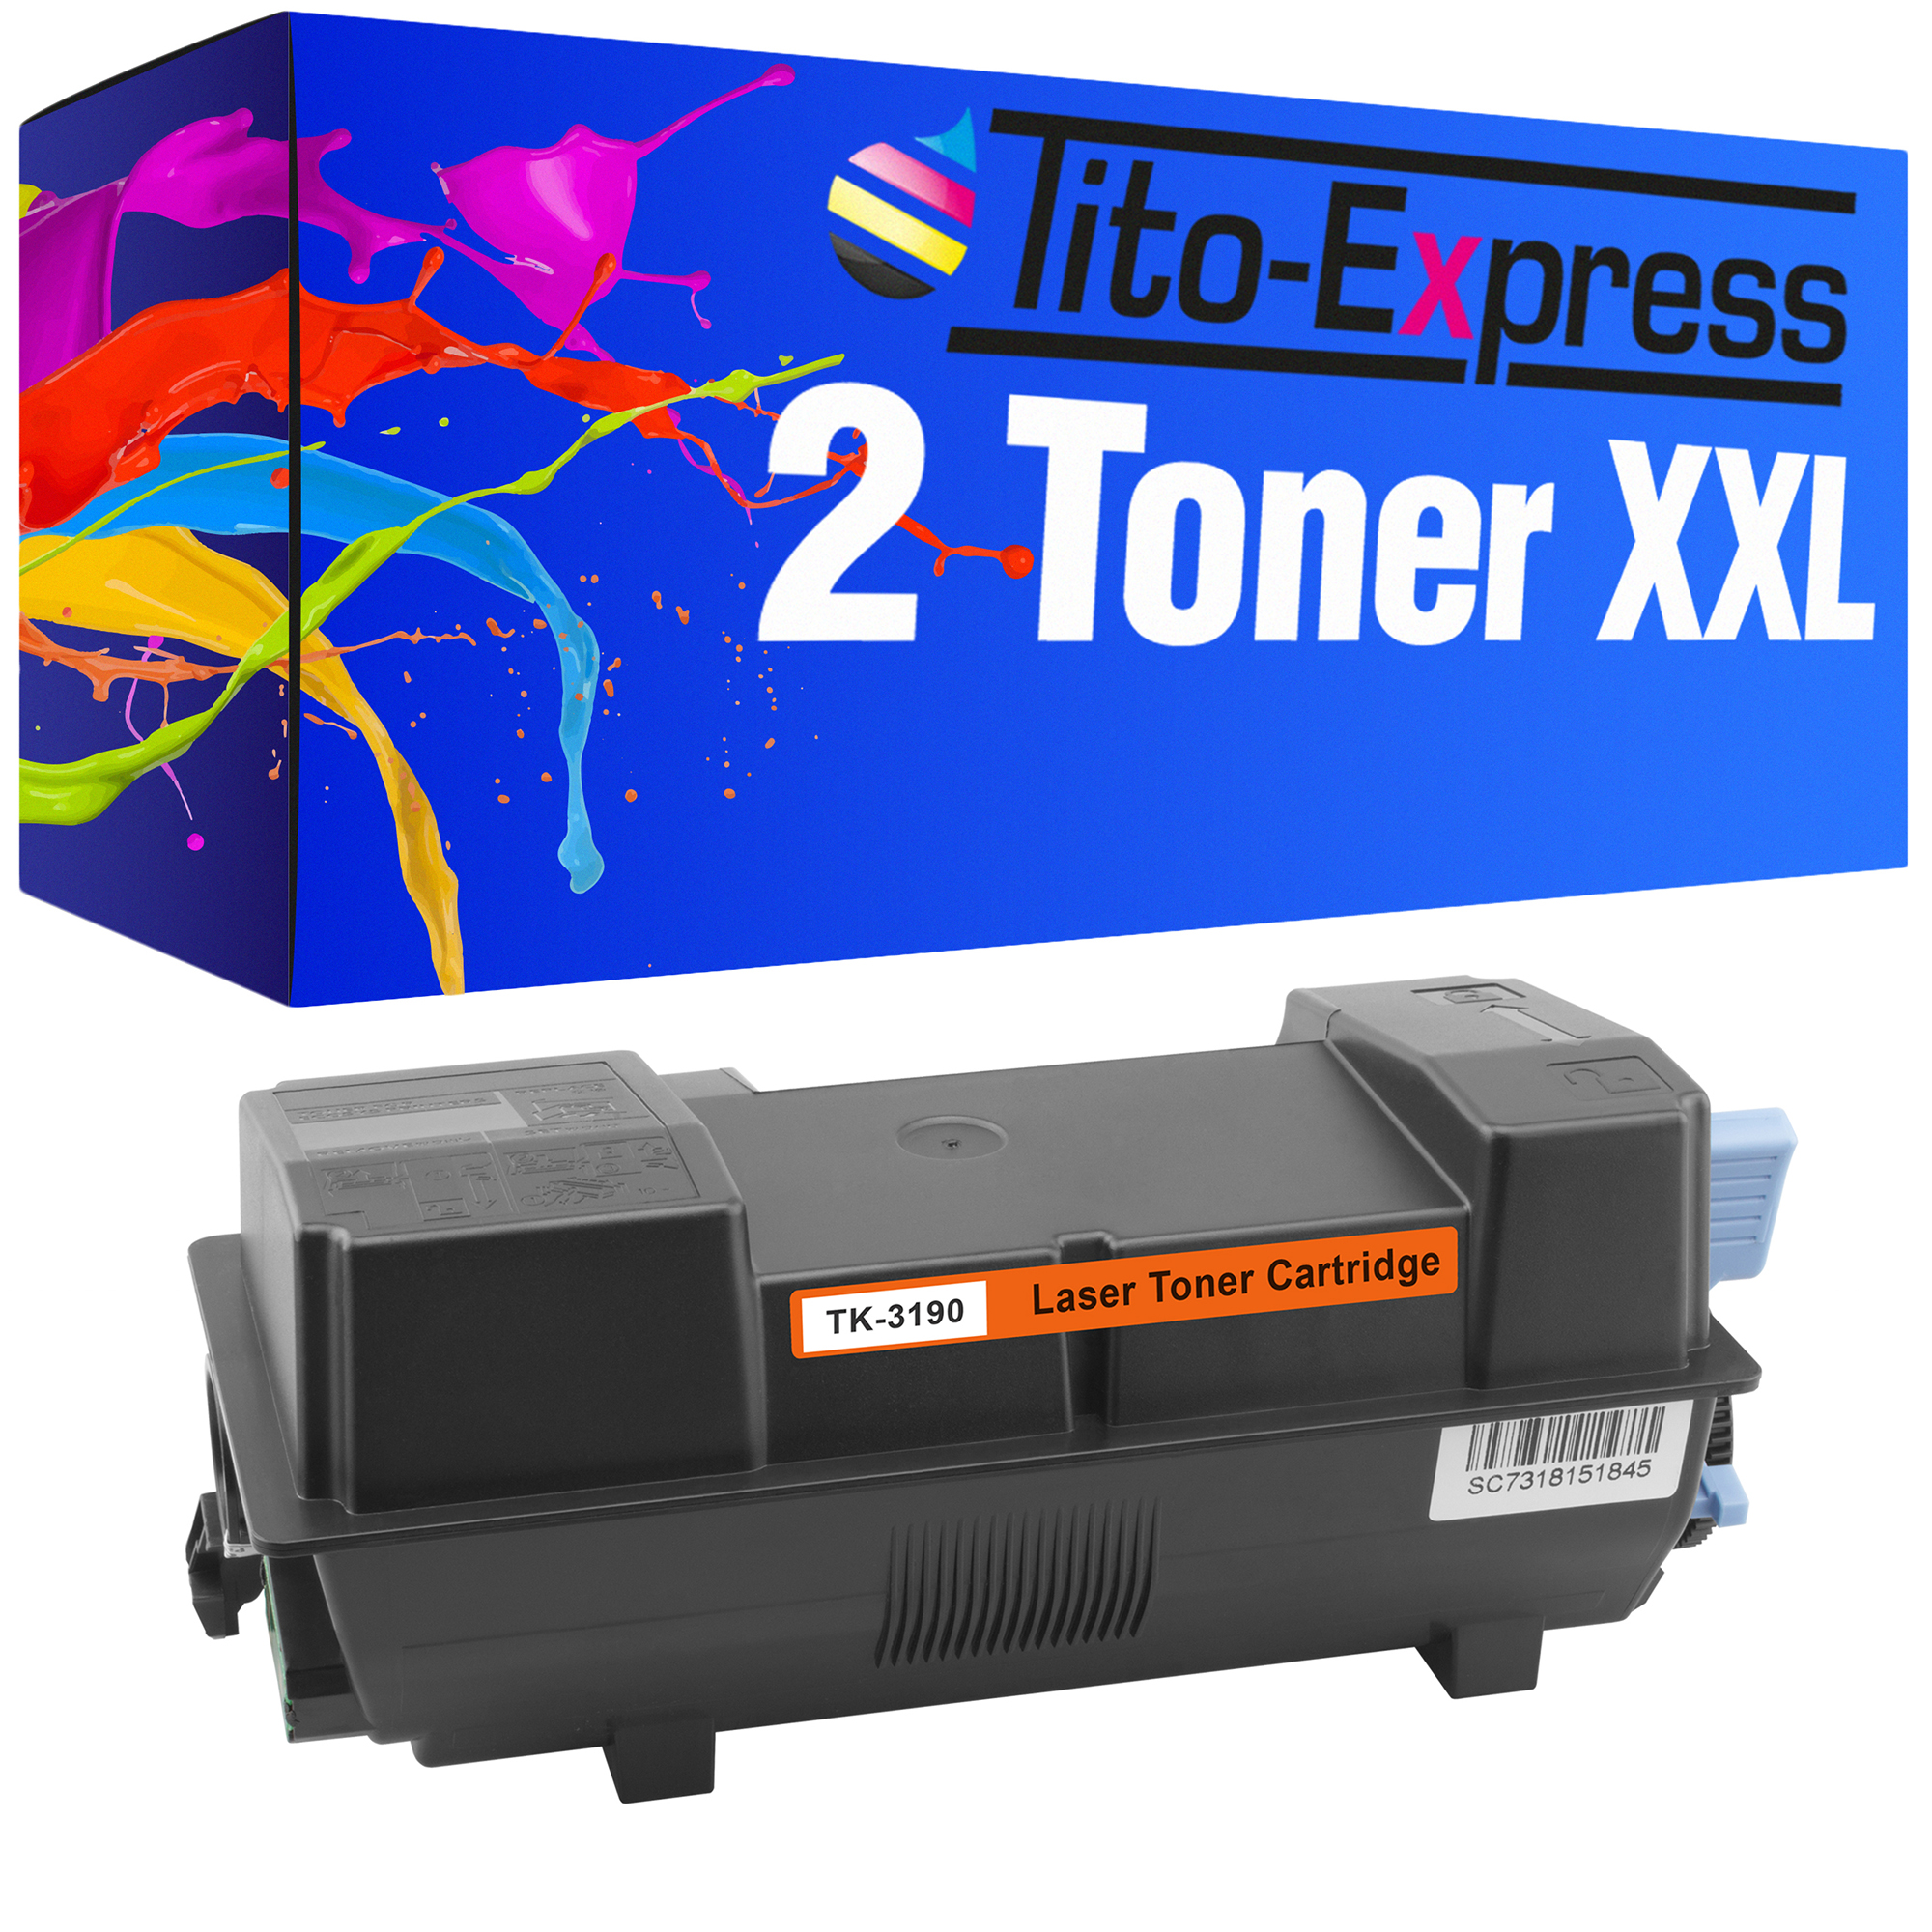 2 (1T02T60NL0) Toner Toner PLATINUMSERIE Kyocera TK-3190 ersetzt TITO-EXPRESS black